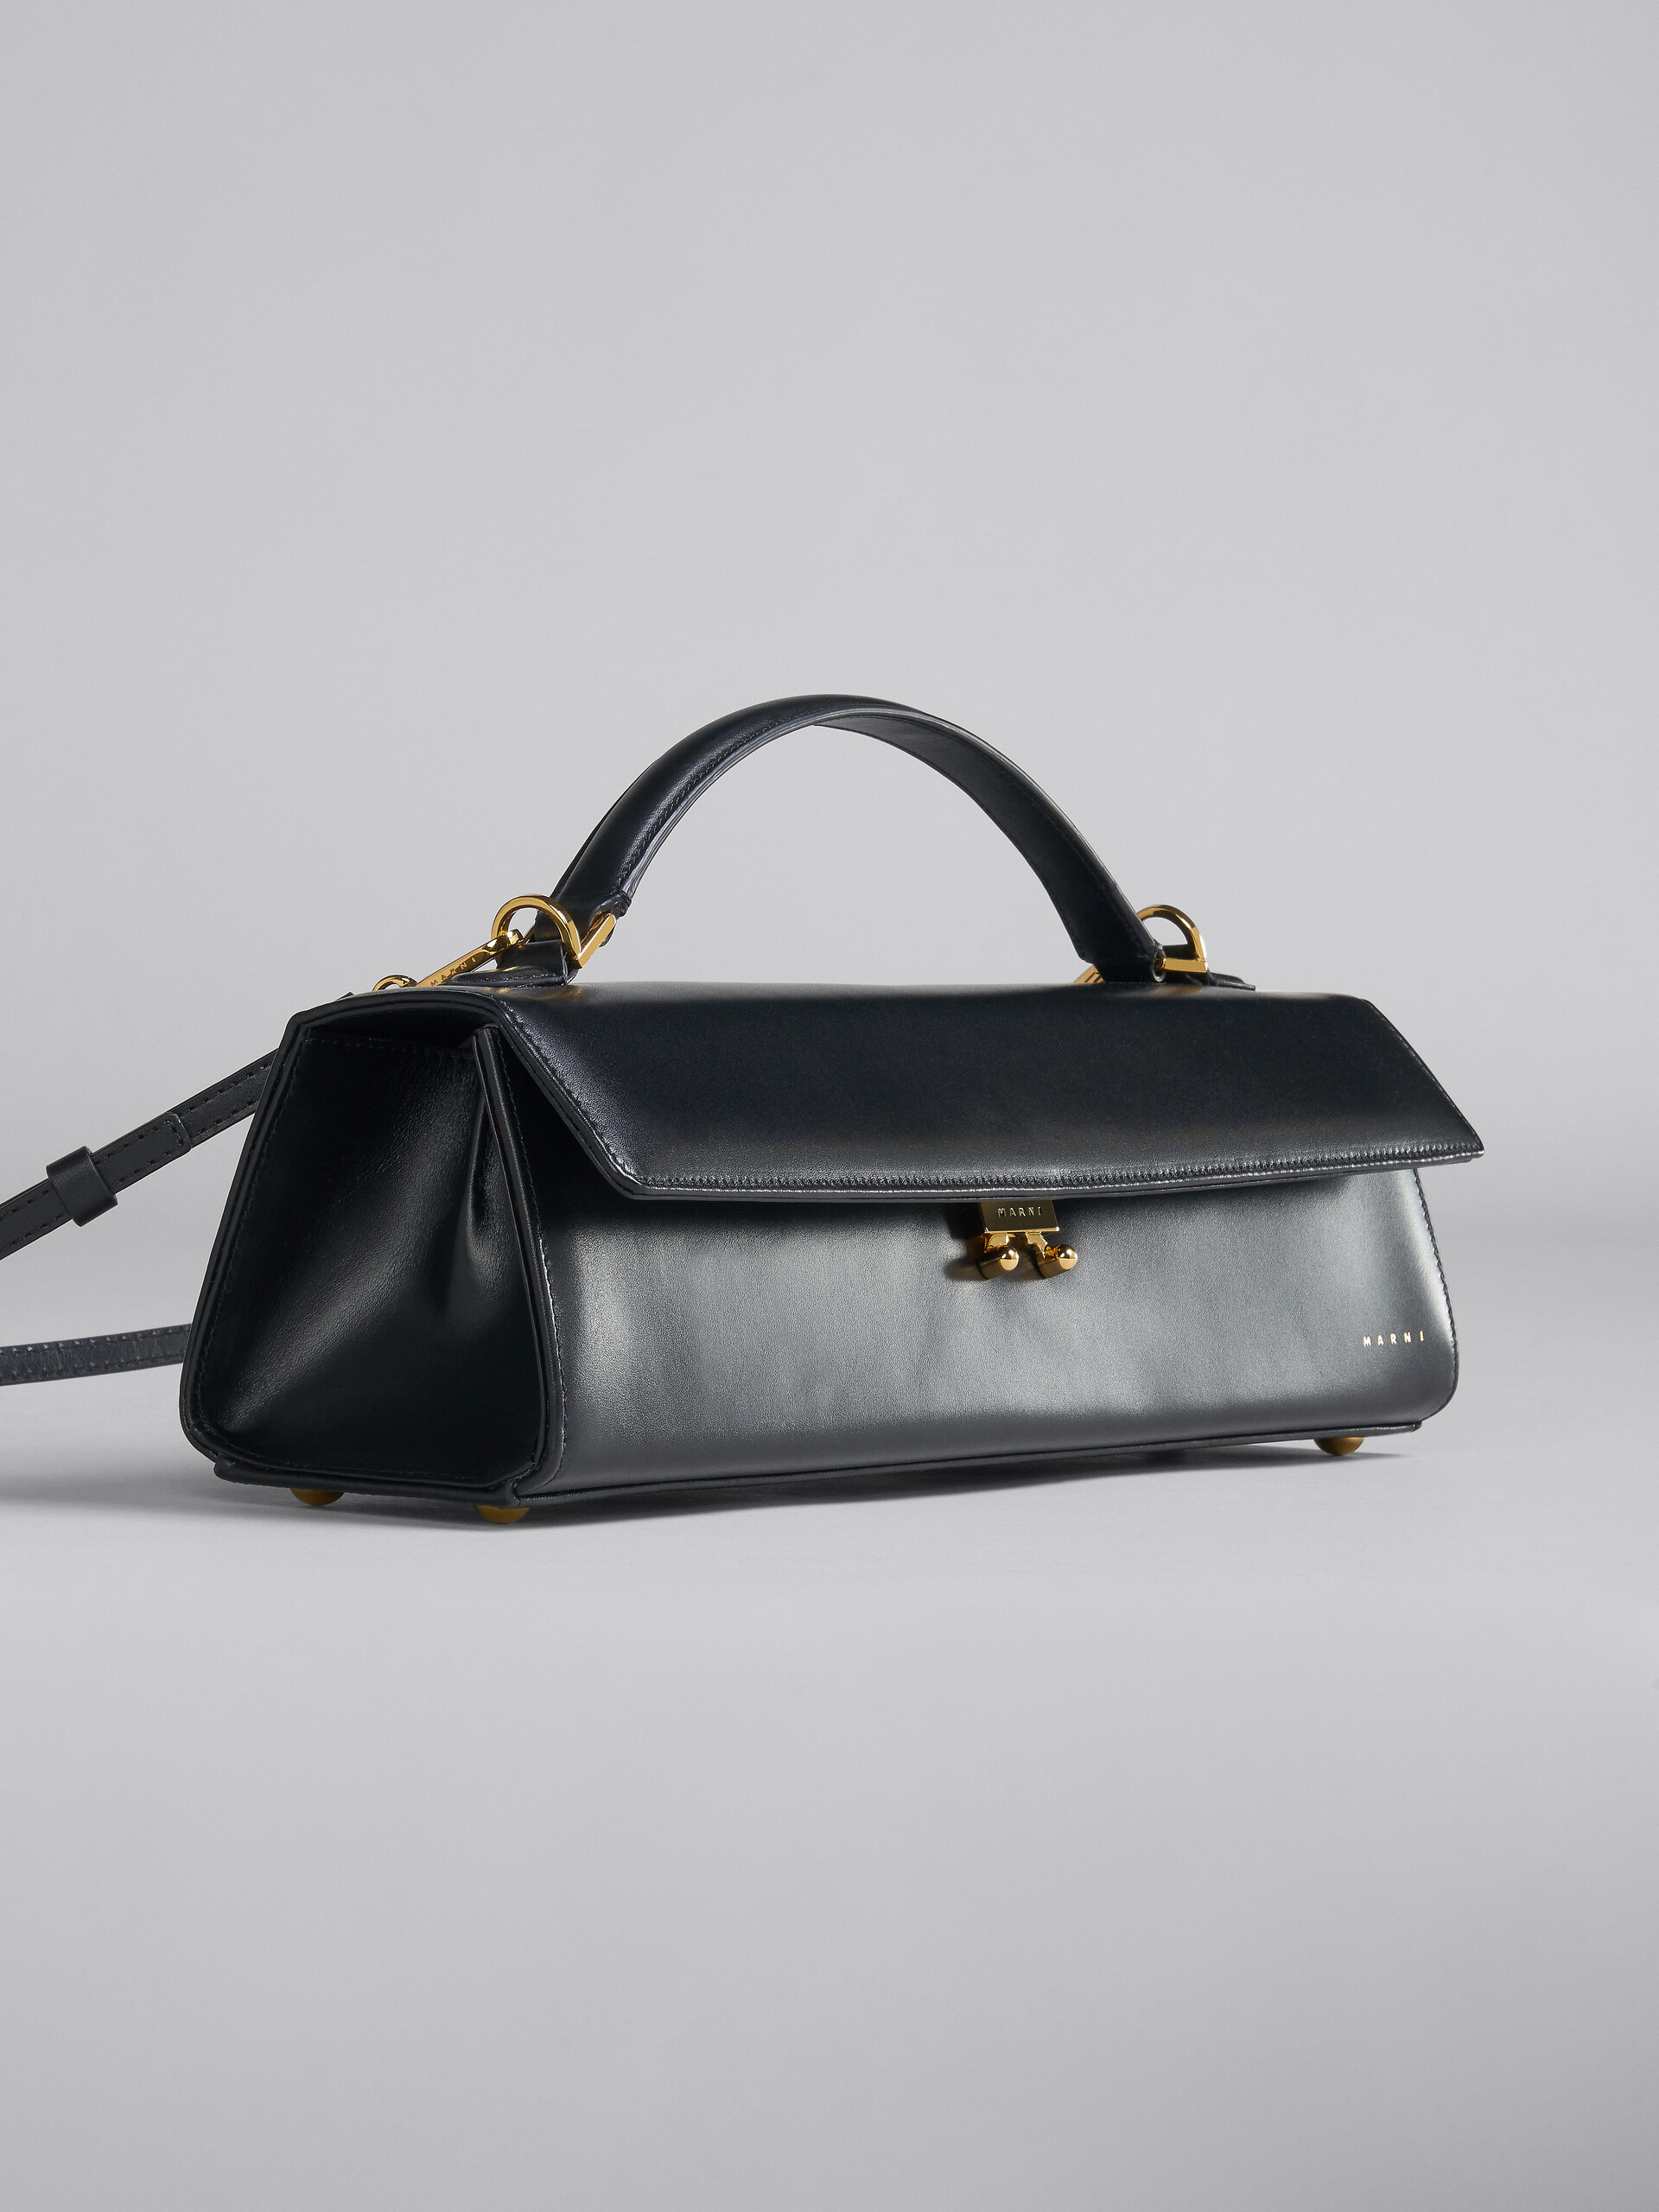 Relativity Large Bag in black leather - Handbags - Image 5